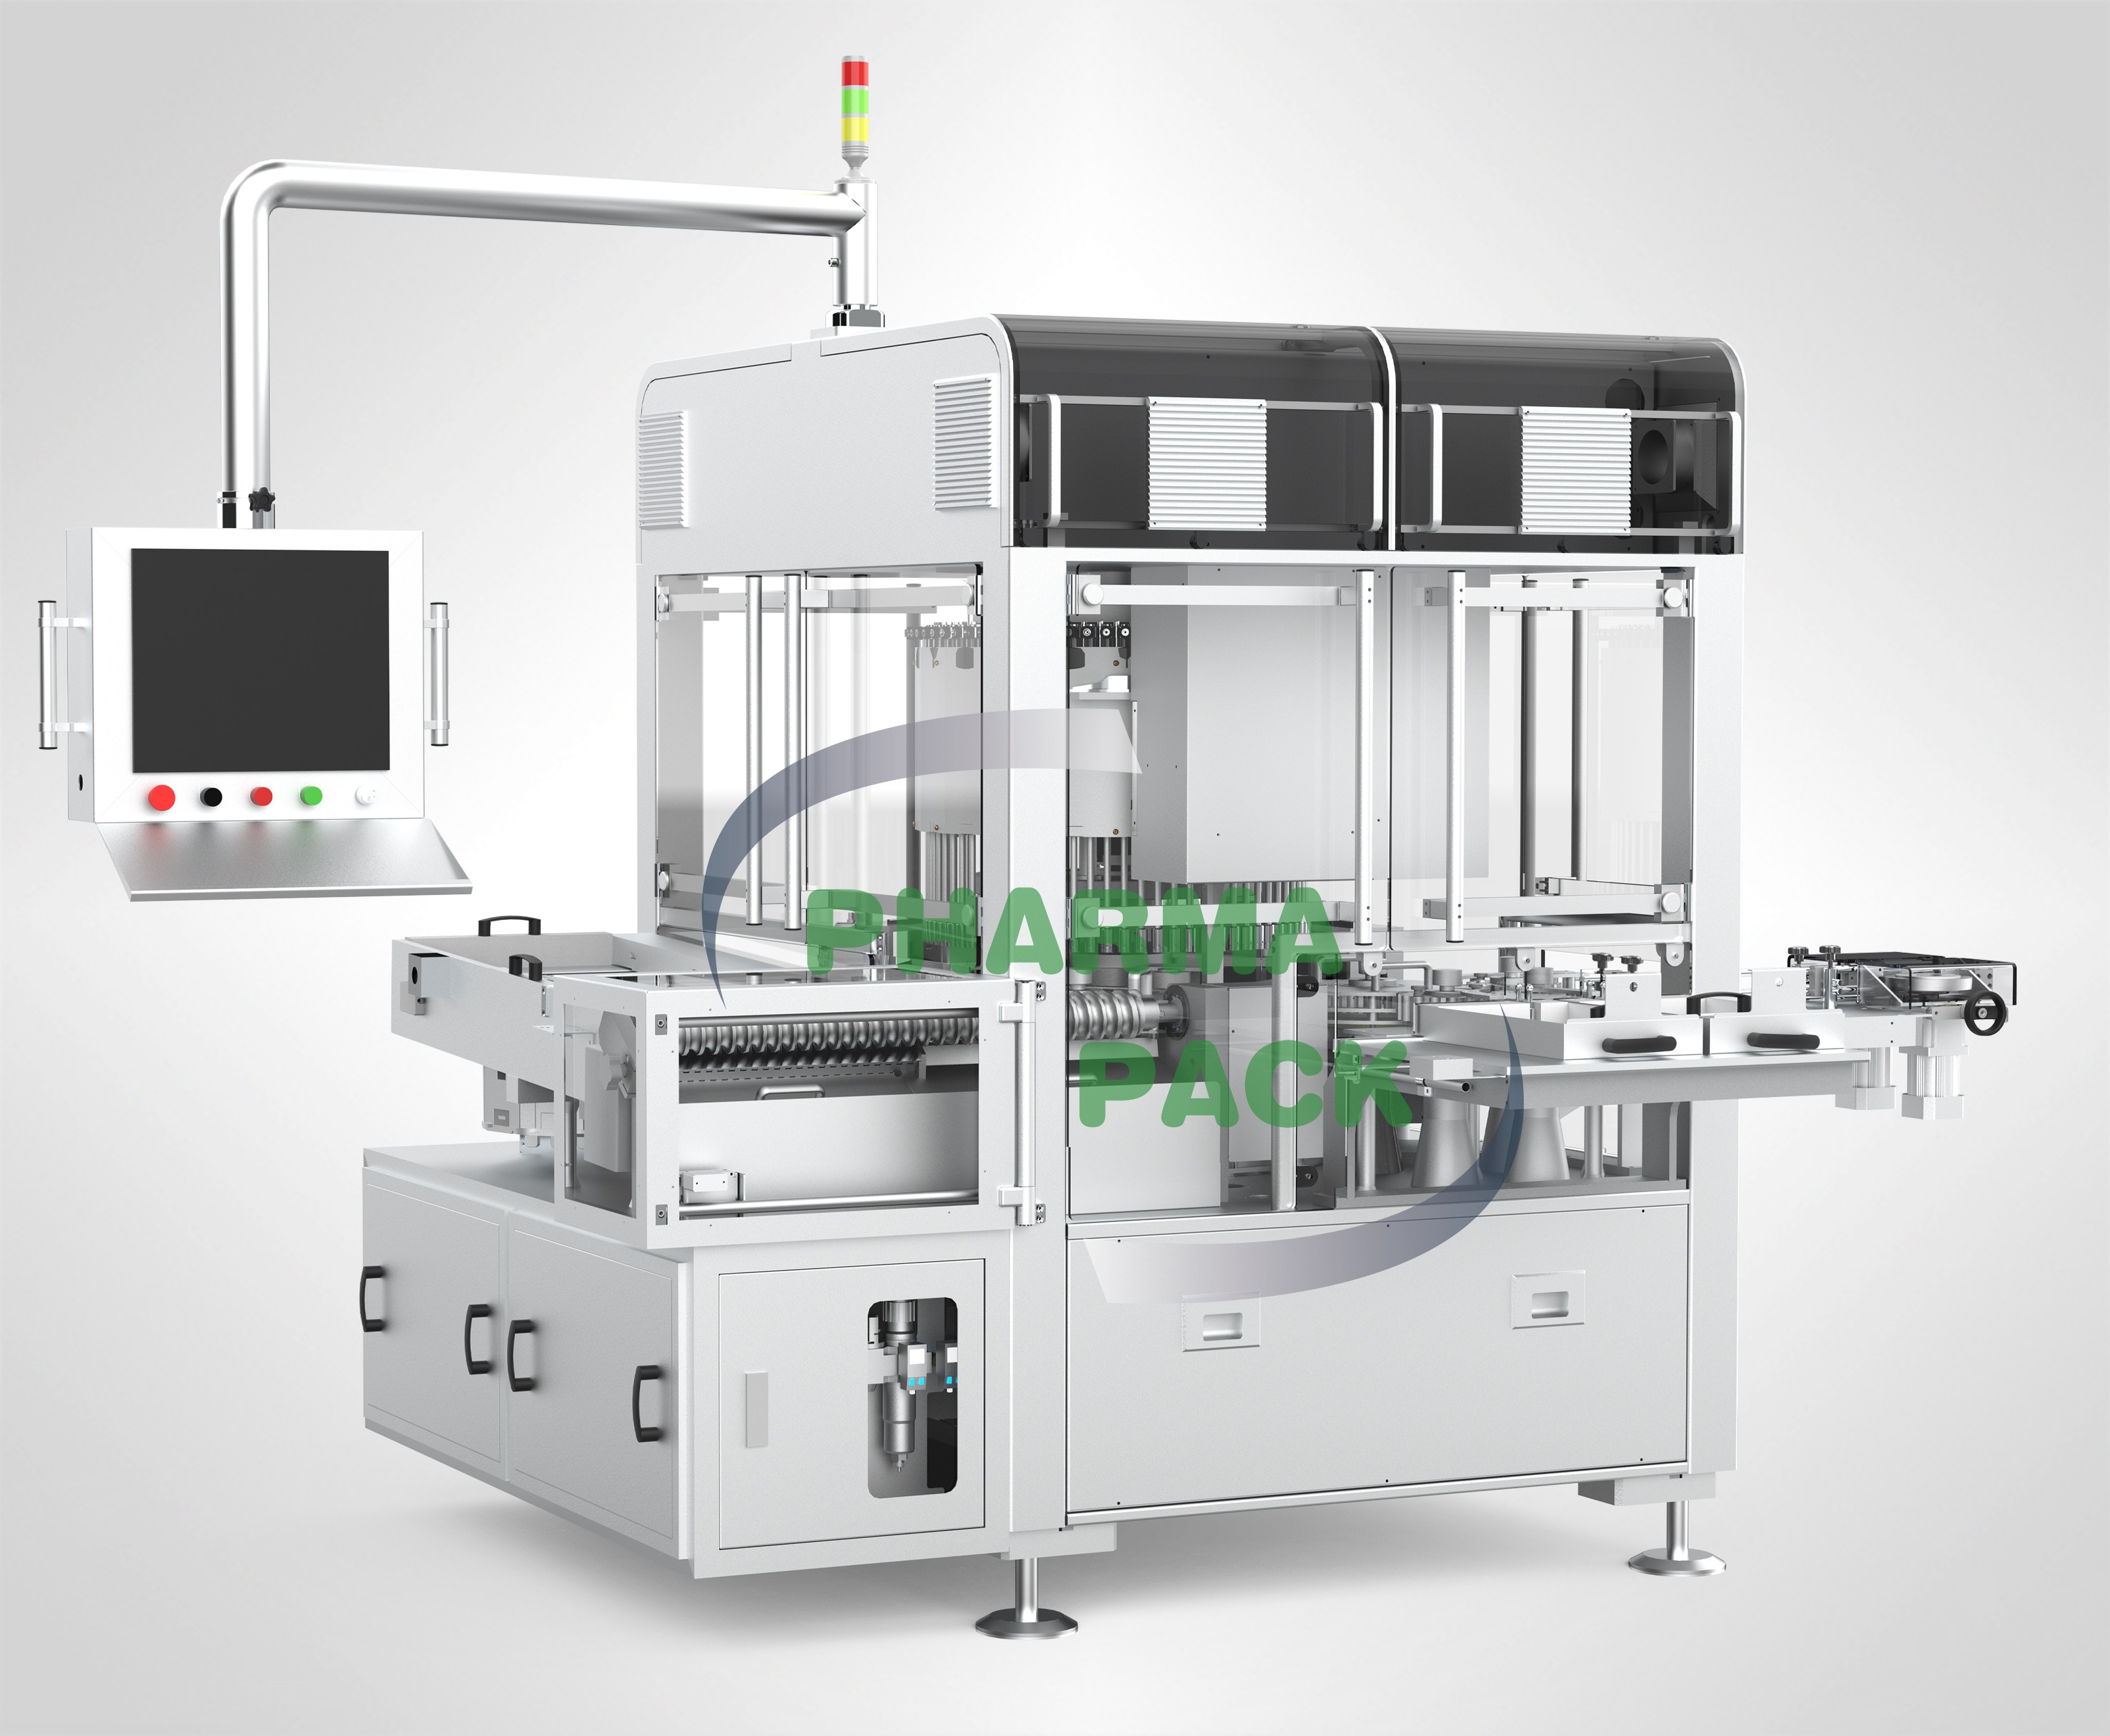 Pharmapack's LFIM-72 Continuous Inspection Machine Improves Quality Control